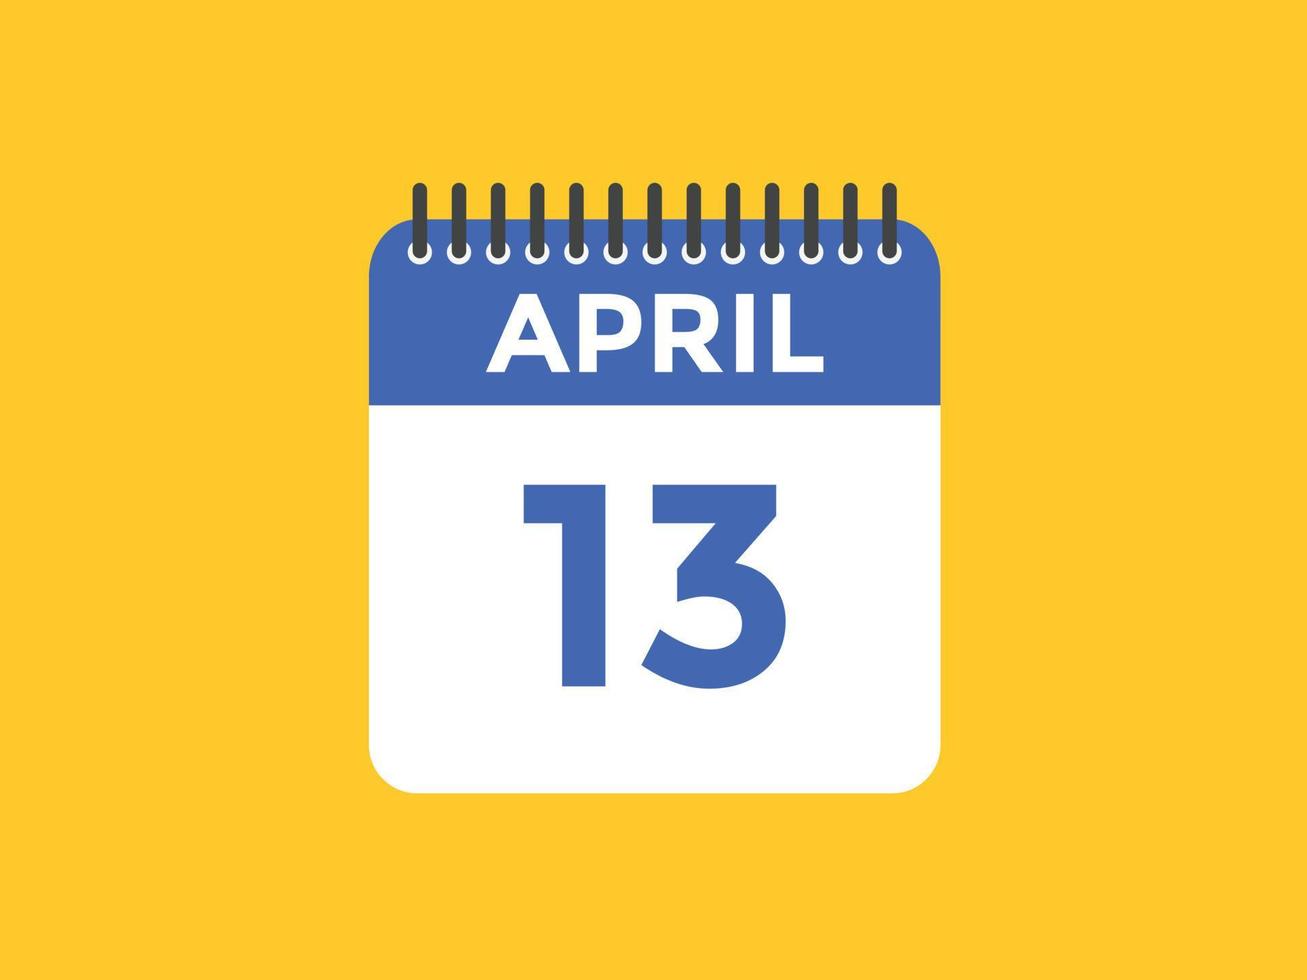 april 13 calendar reminder. 13th april daily calendar icon template. Calendar 13th april icon Design template. Vector illustration